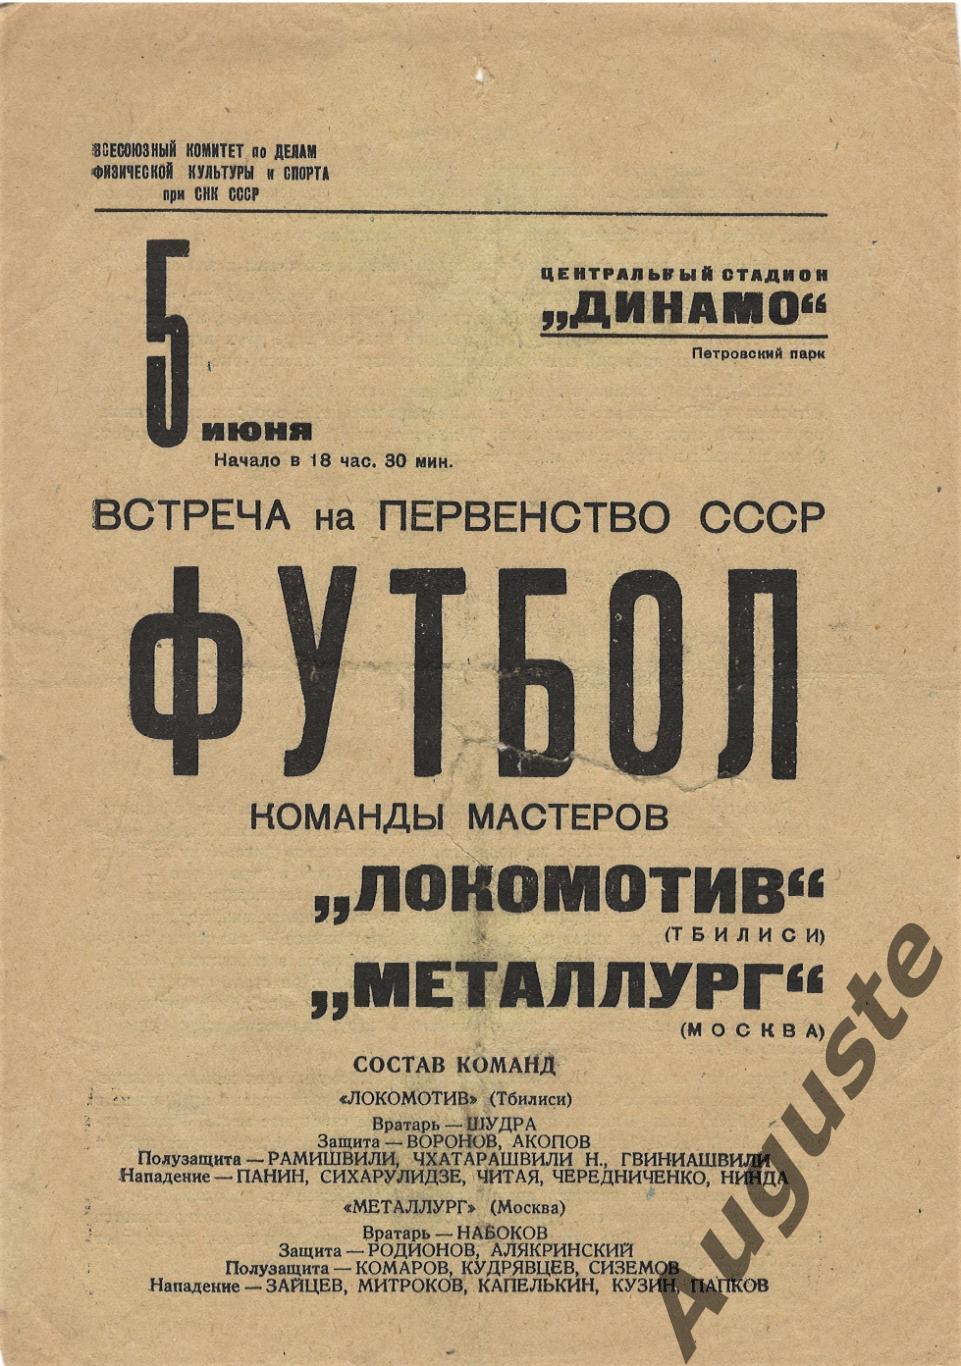 Металлург Москва – Локомотив Тбилиси. Первенство СССР. 5 июня 1938 г. Москва.